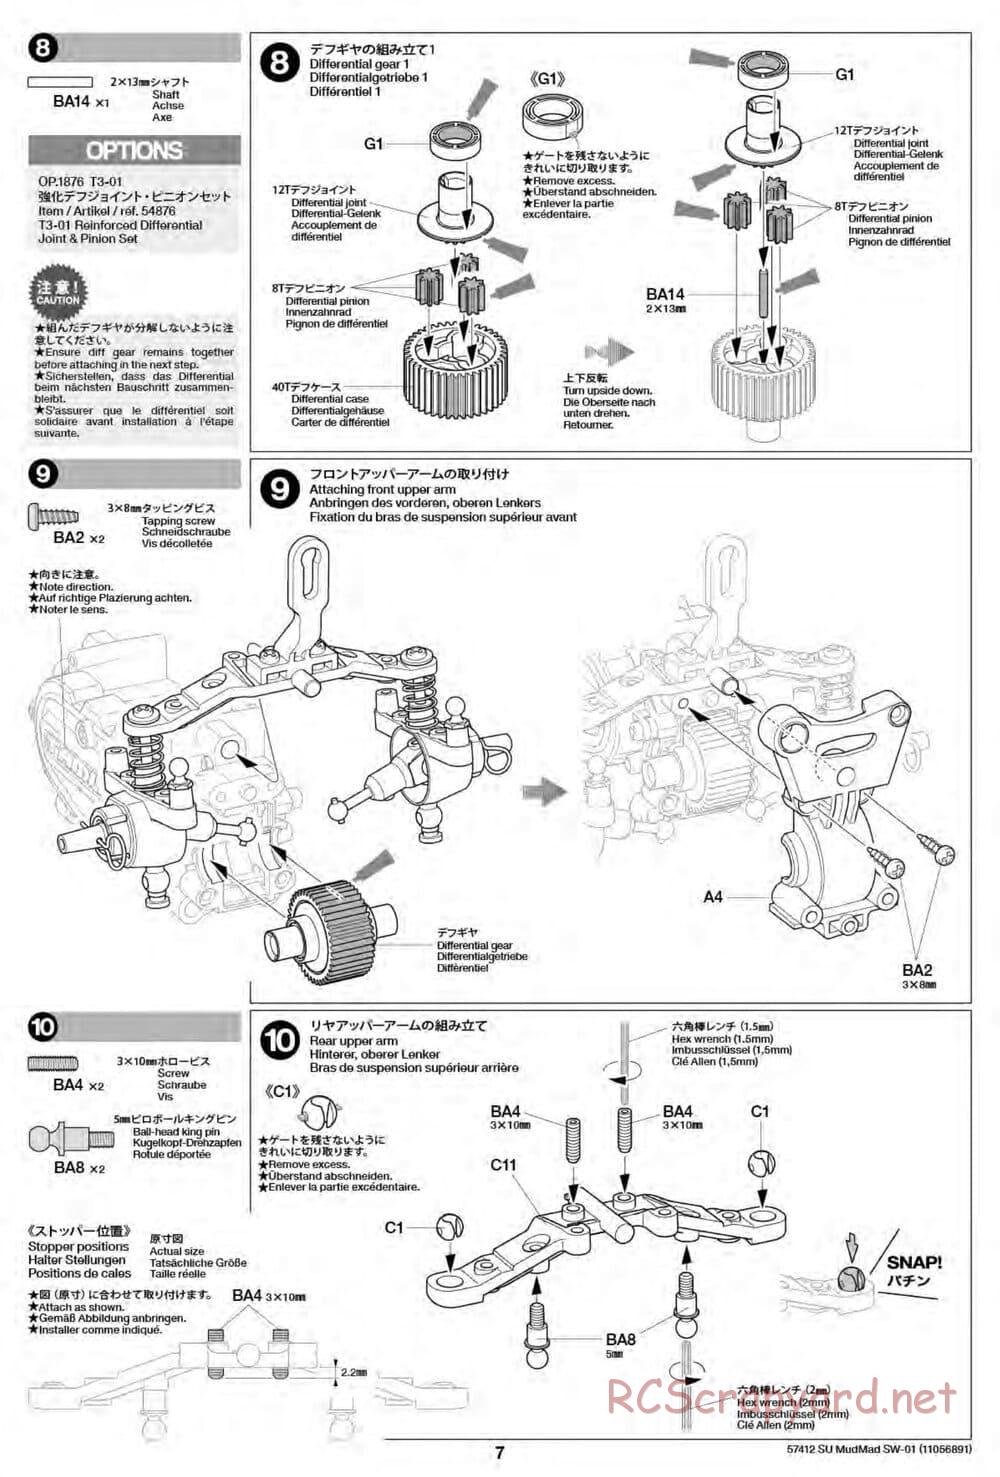 Tamiya - MudMad - SW-01 Chassis - Manual - Page 7